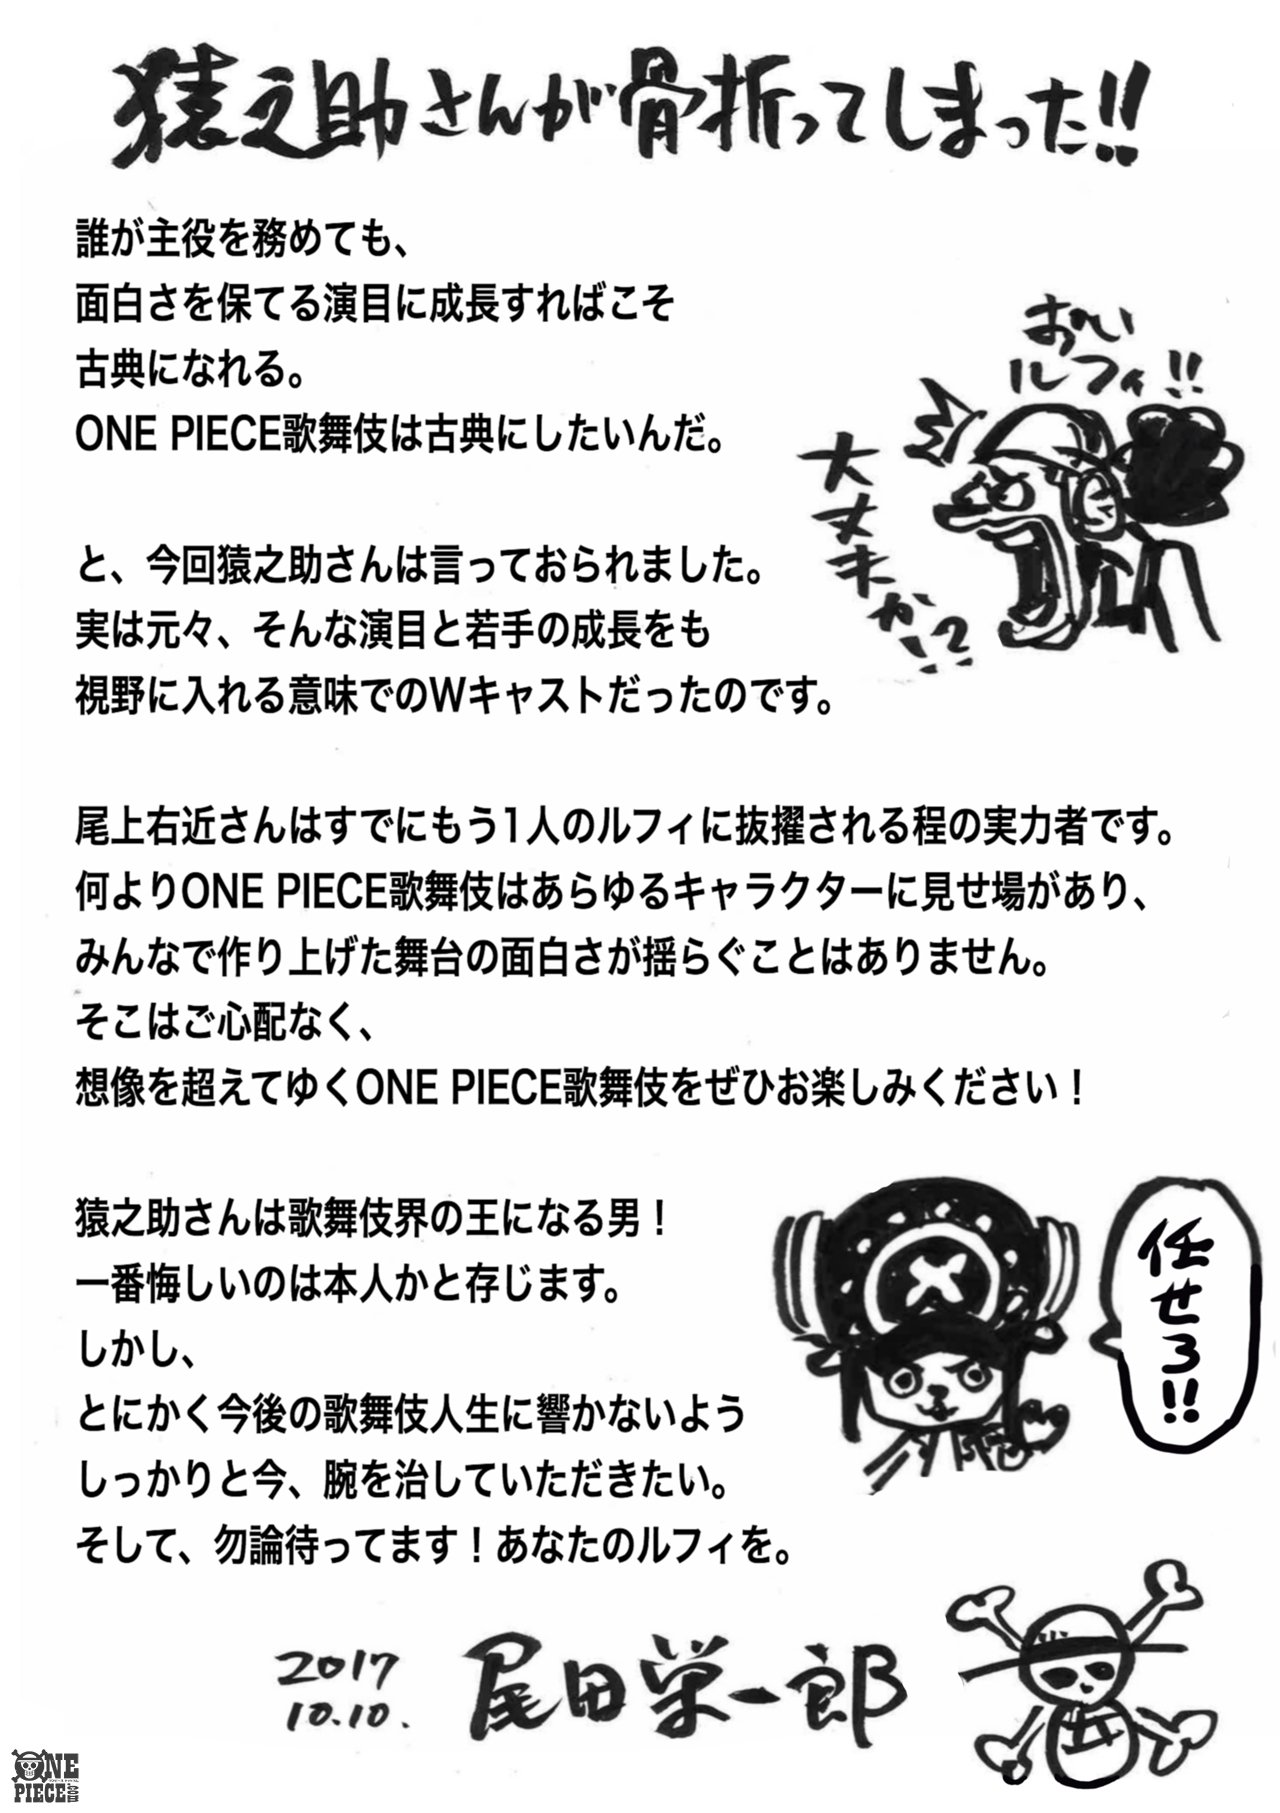 One Piece Com ワンピース One Piece Com ニュース スーパー歌舞伎ii ワンピース 市川猿之助さんについて尾田栄一郎先生からのメッセージが届きました T Co 9ye3g8mfkd T Co Jaoevfmxpt Twitter